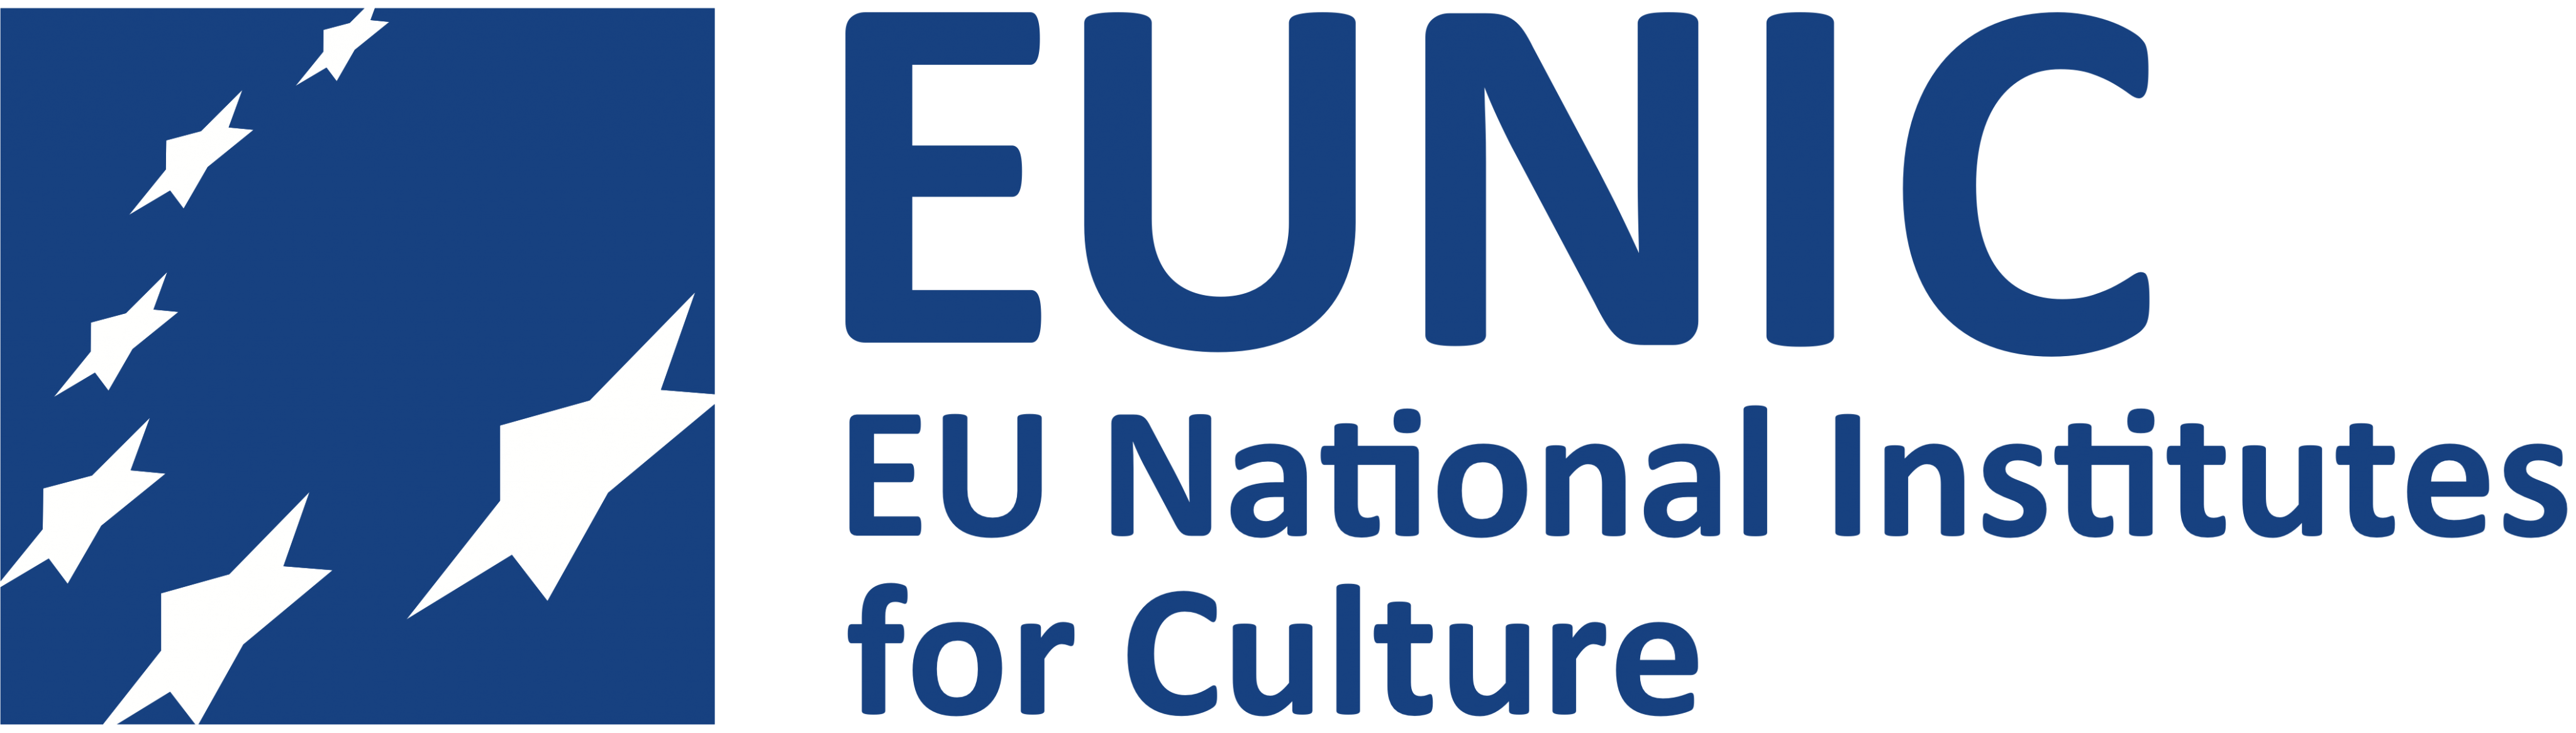 EUNIC - European National Institutes for Culture (Beijing)